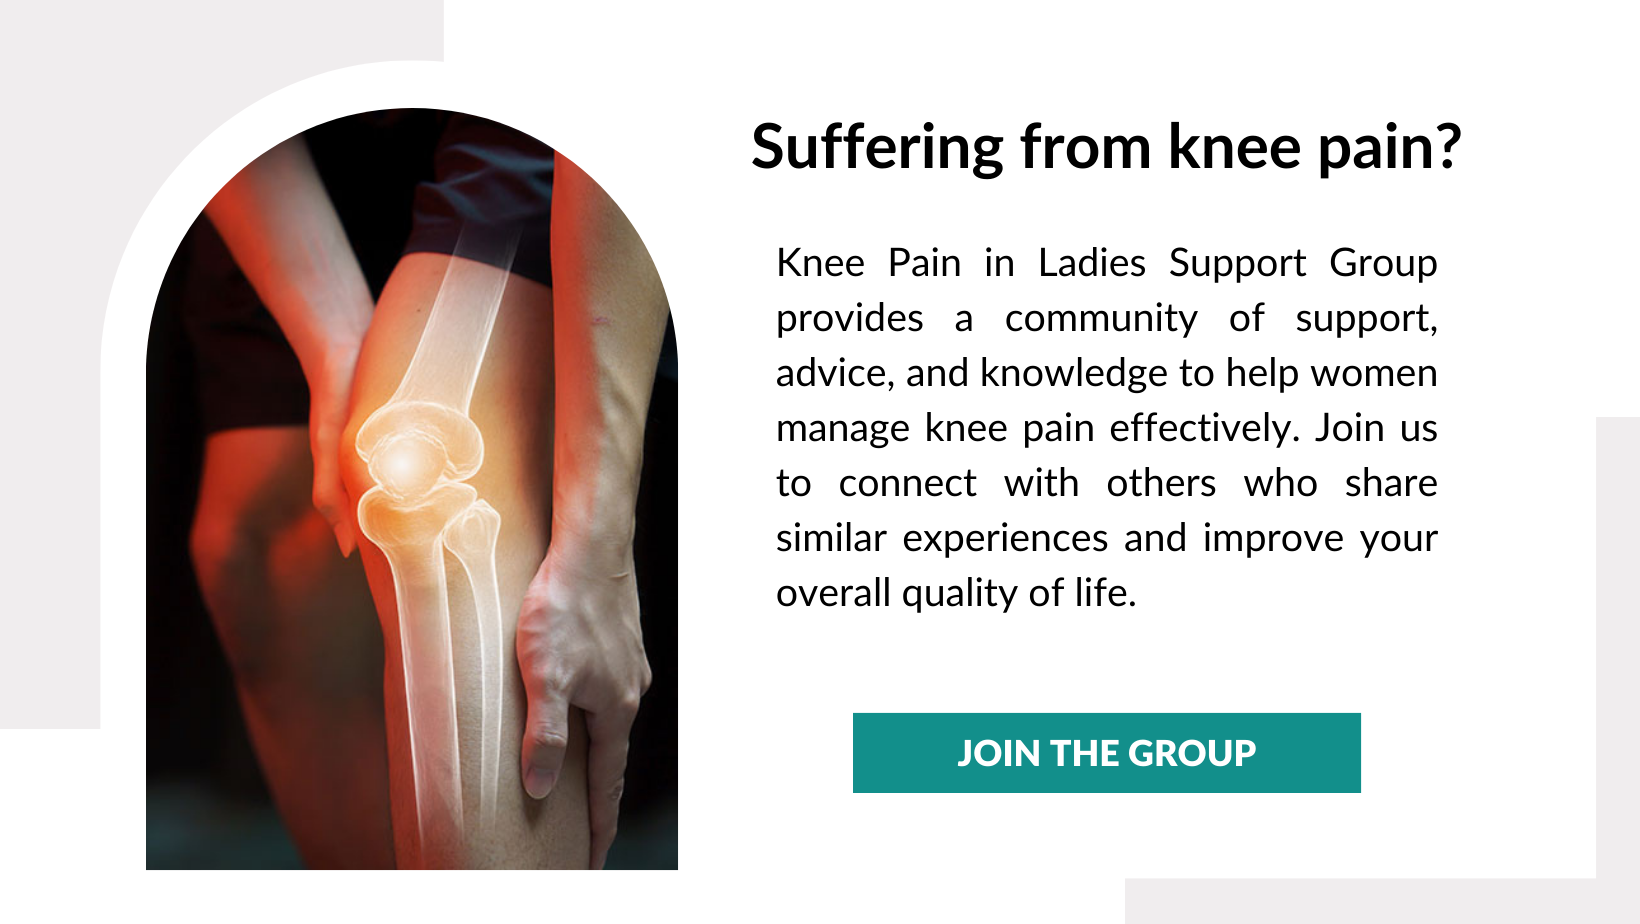 knee pain in ladies Facebook support group